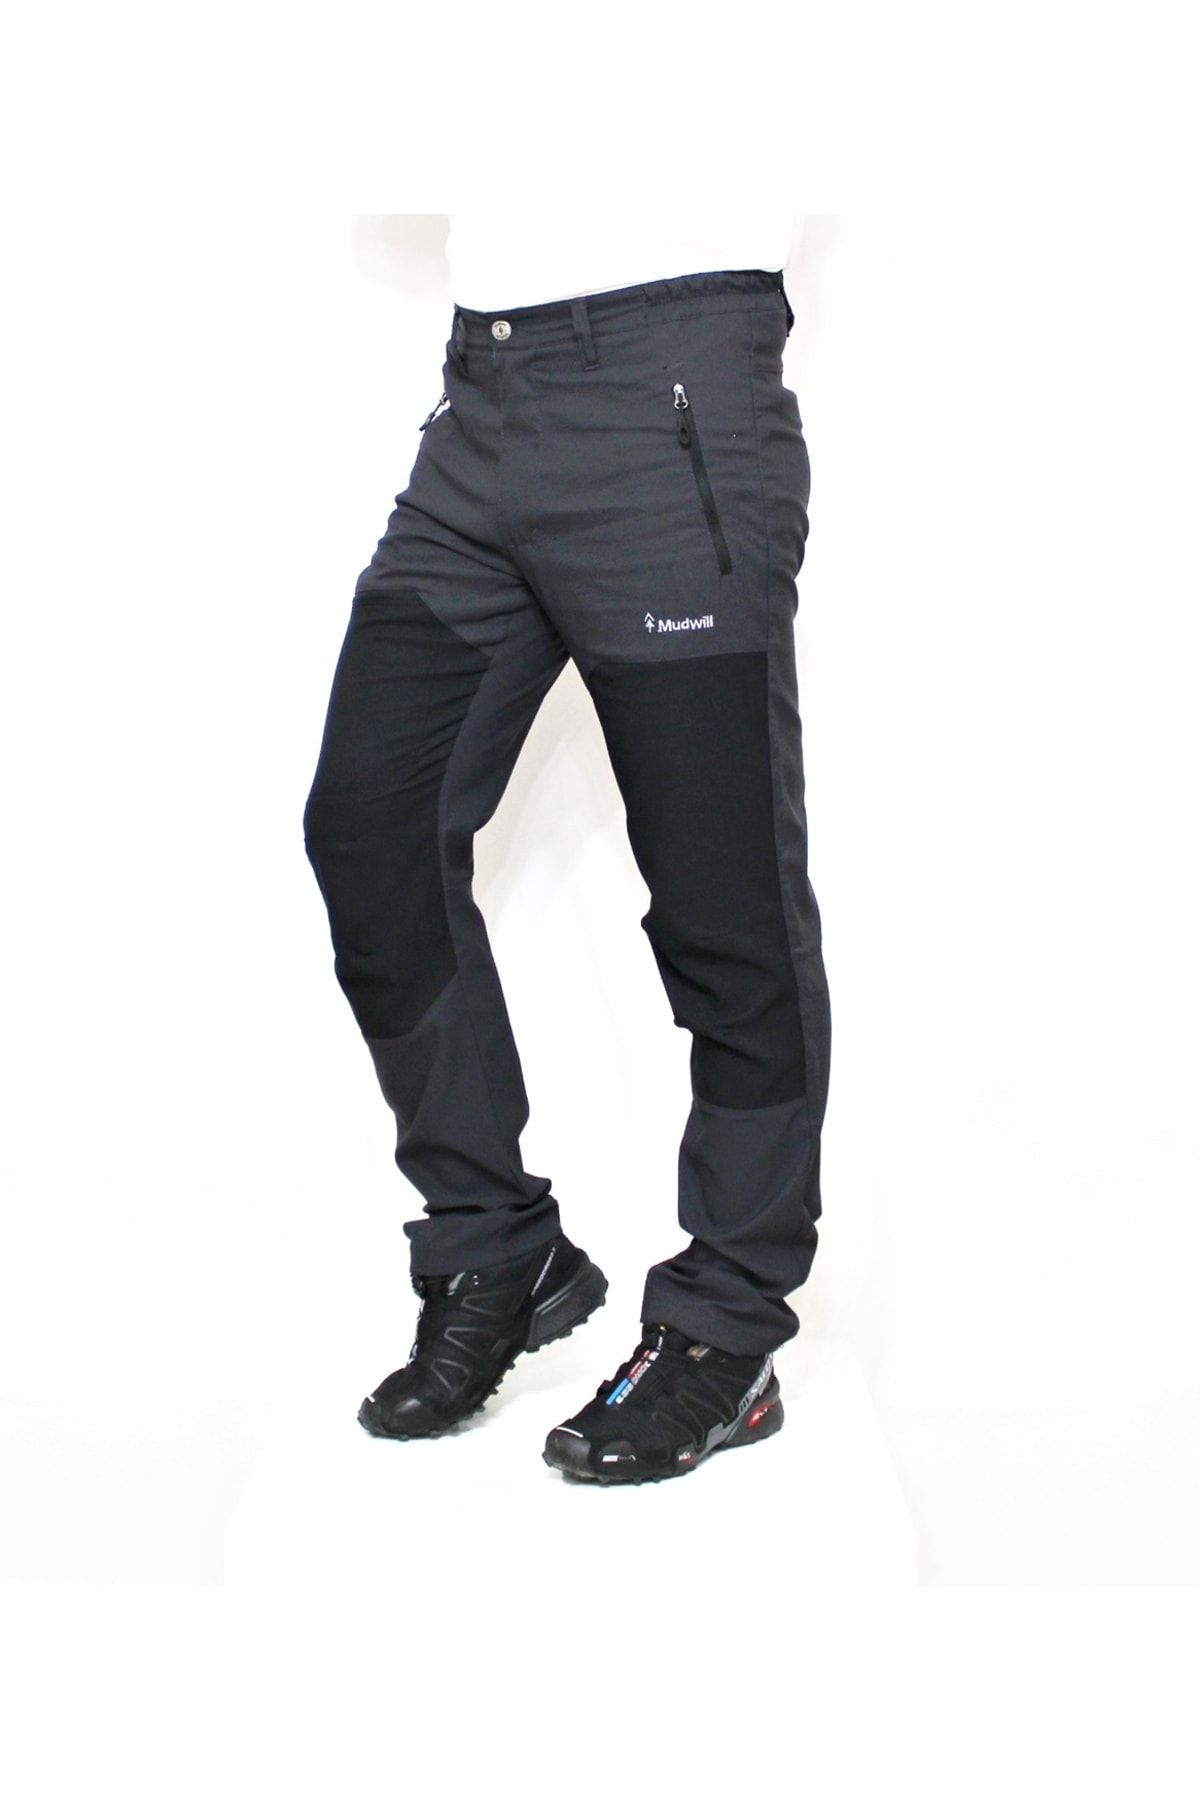 Mudwill Alpin Erkek Outdoor Pantolon-gri Siyah